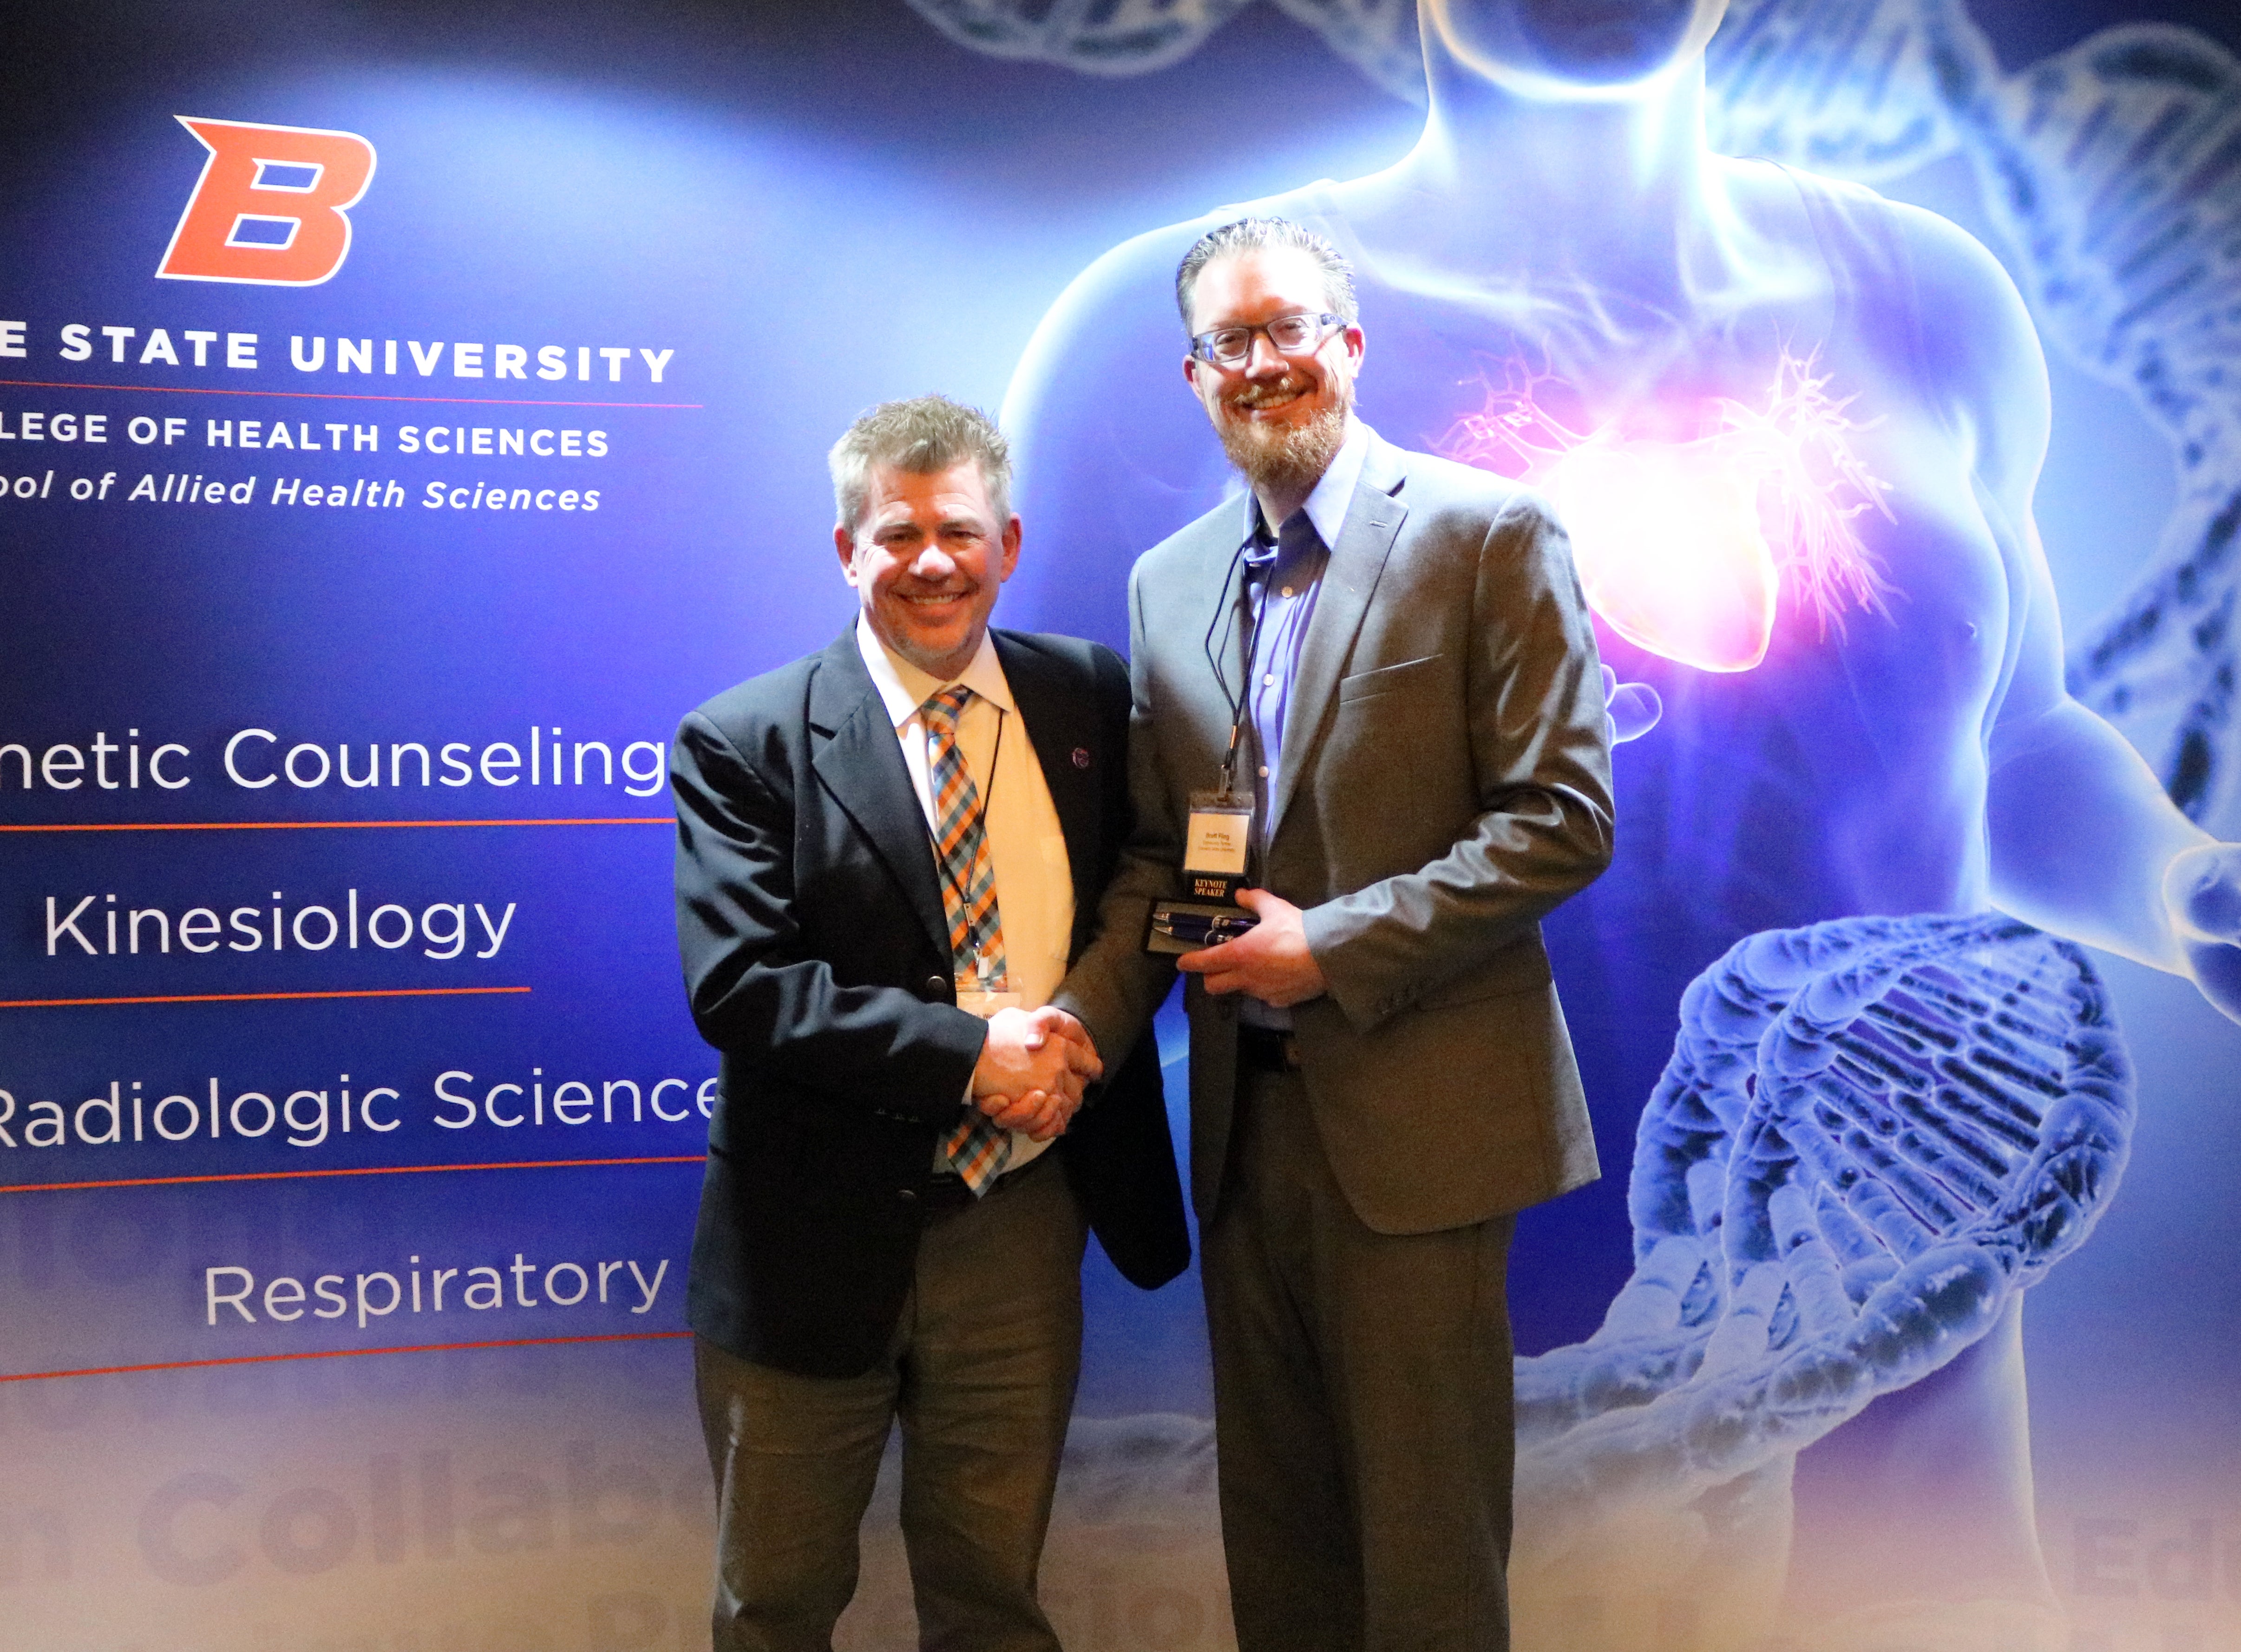 Dr. Bob Wood and Dr. Brett Fling shake hands